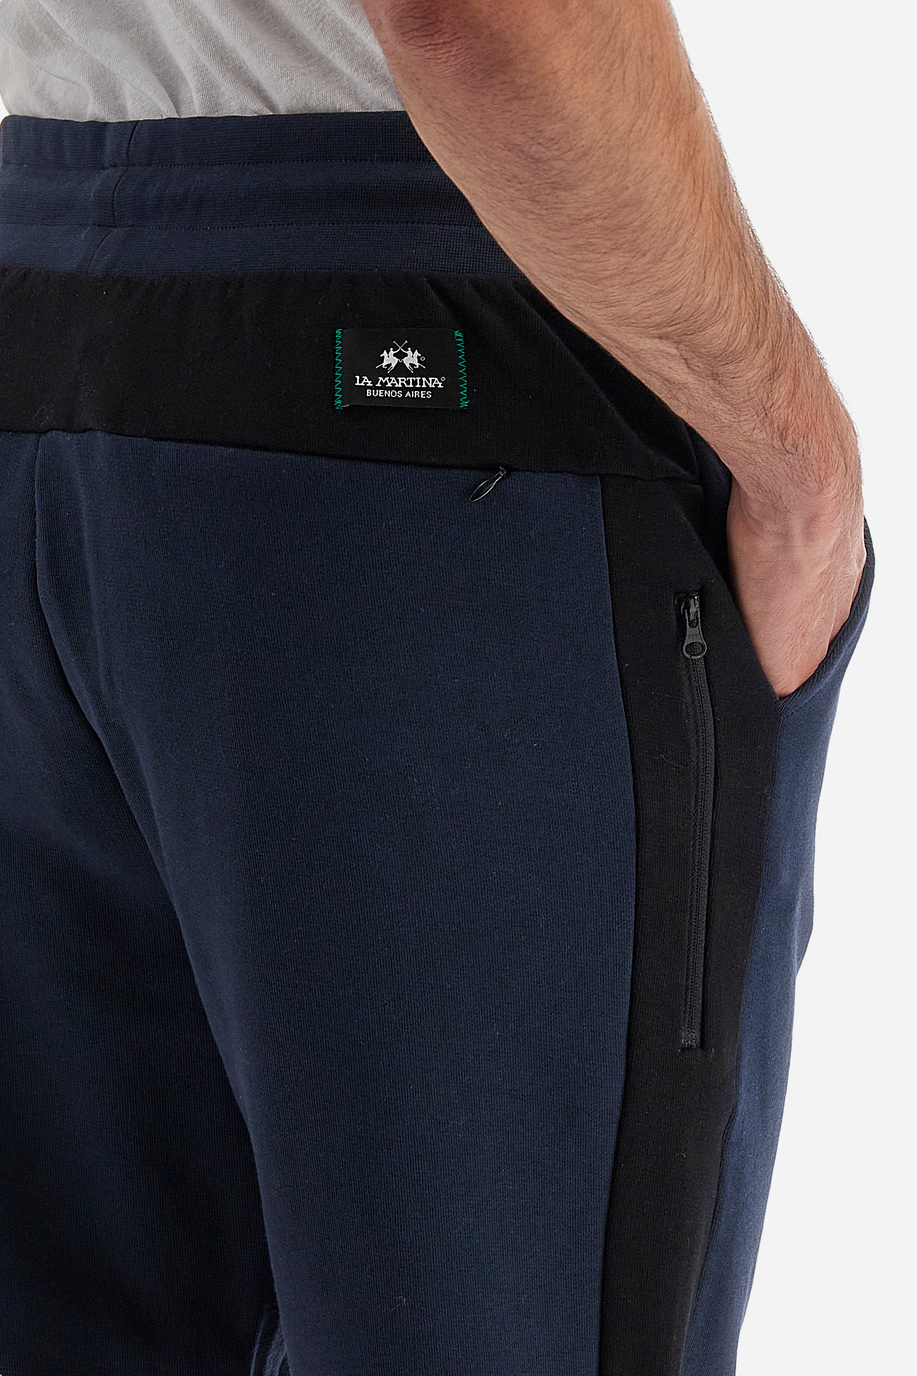 Men's jogger Logos cotton fleece with drawstring - Videlio - Trousers | La Martina - Official Online Shop